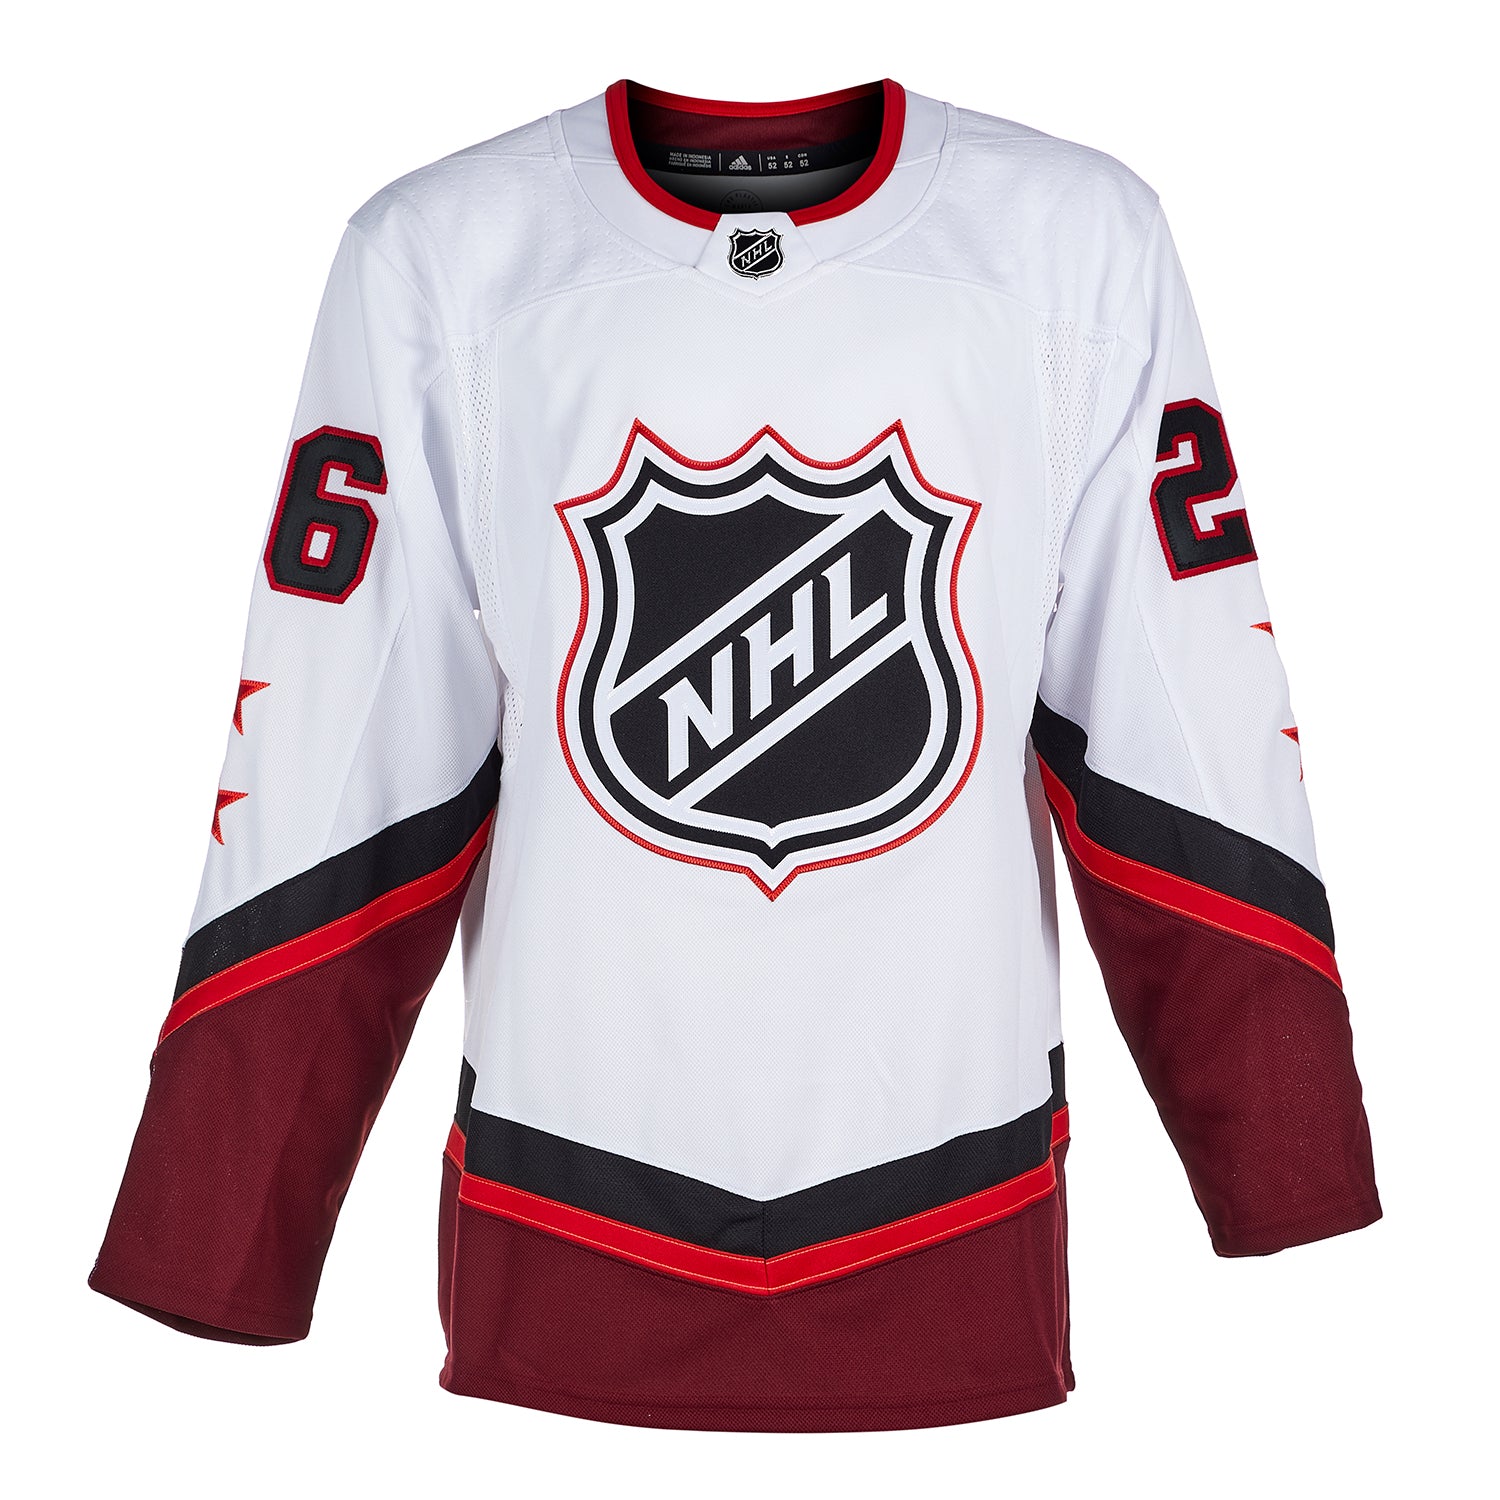 Joe Pavelski Signed 2022 NHL All-Star 4th ASG Adidas Jersey - NHL Auctions